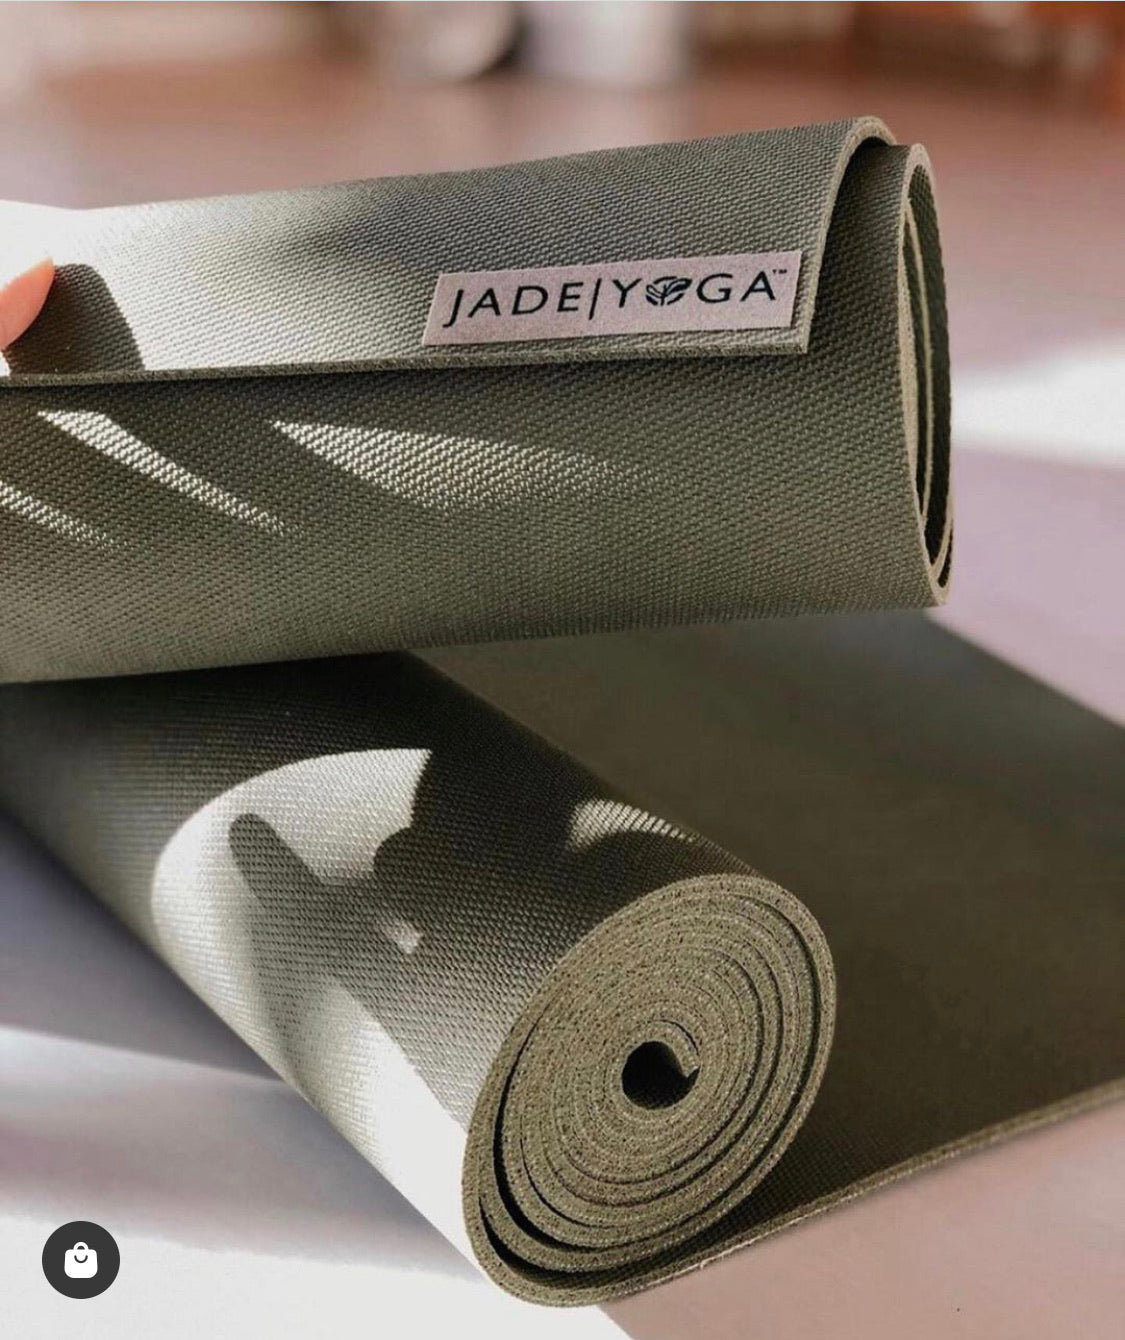 Jade Yoga- Harmony Mat